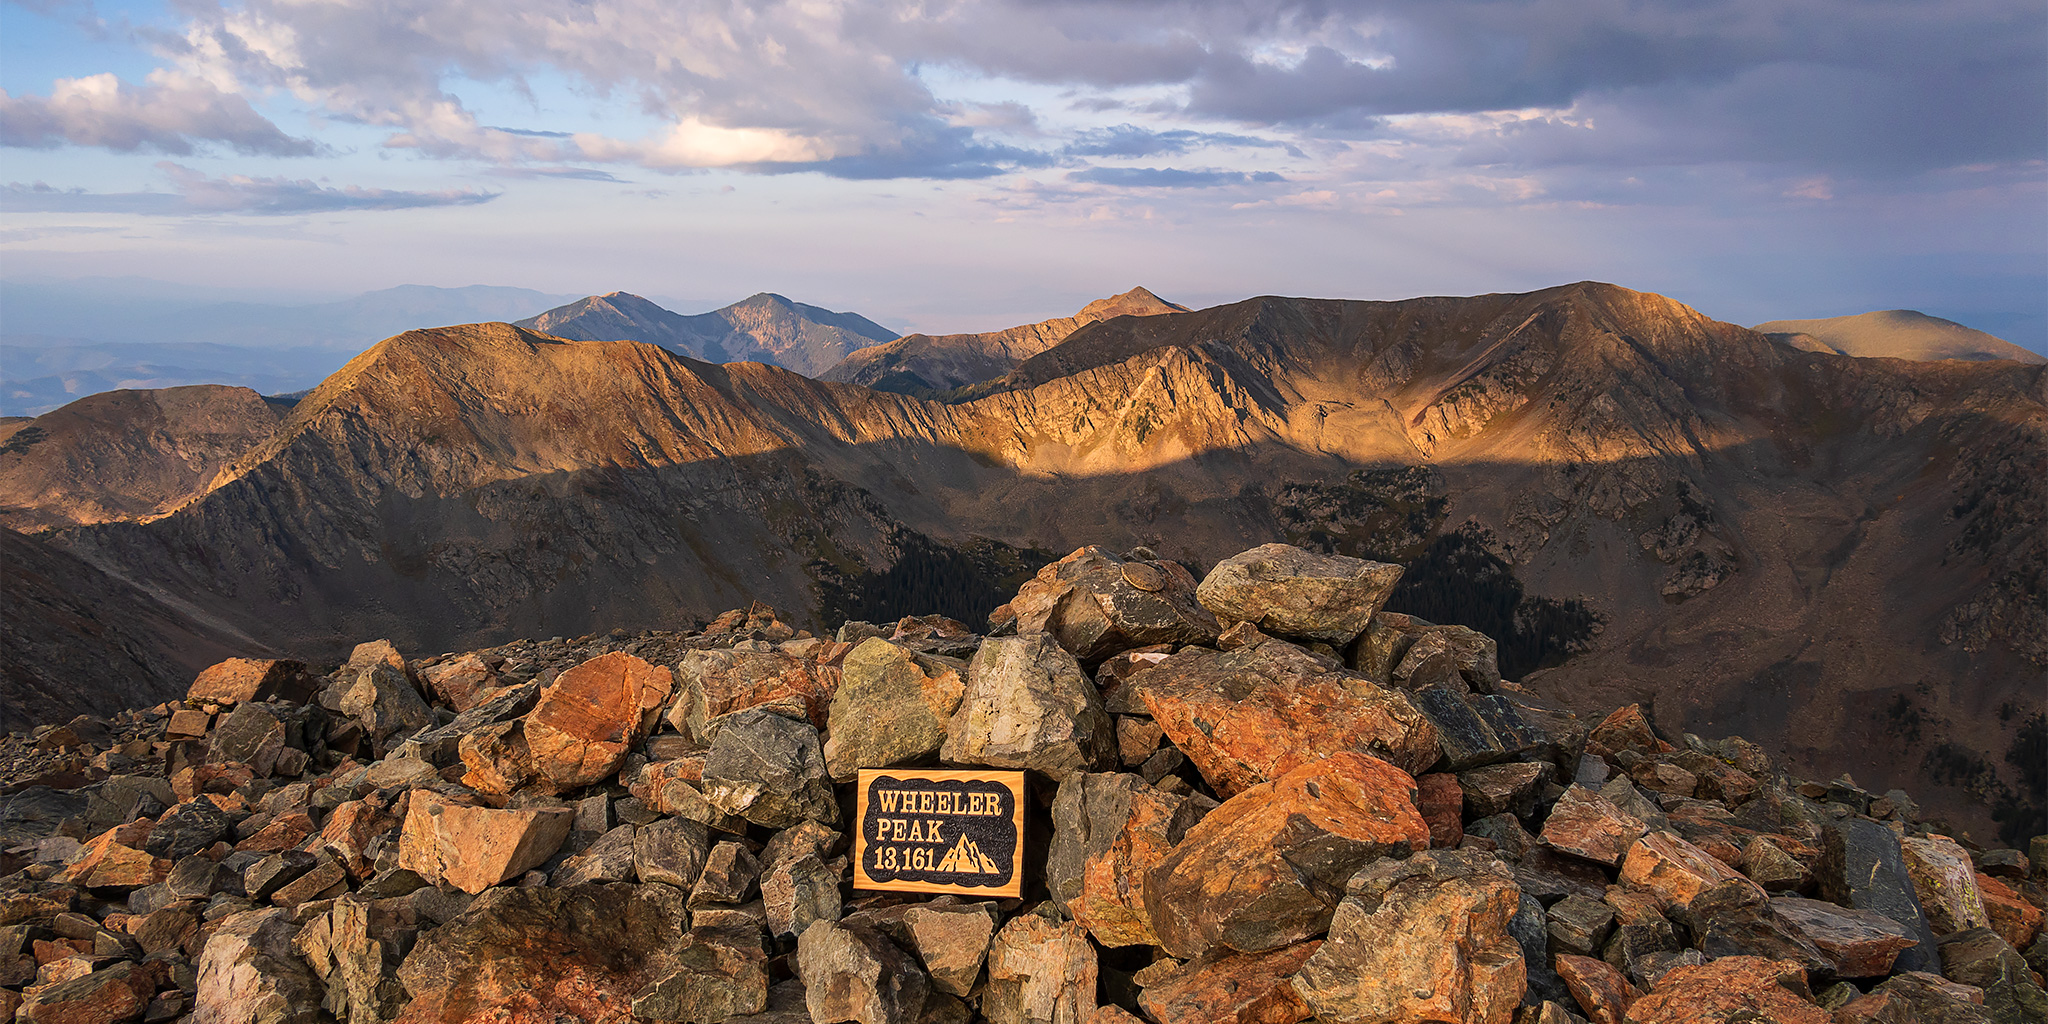 The Highest Peak in New Mexico: Wheeler Peak